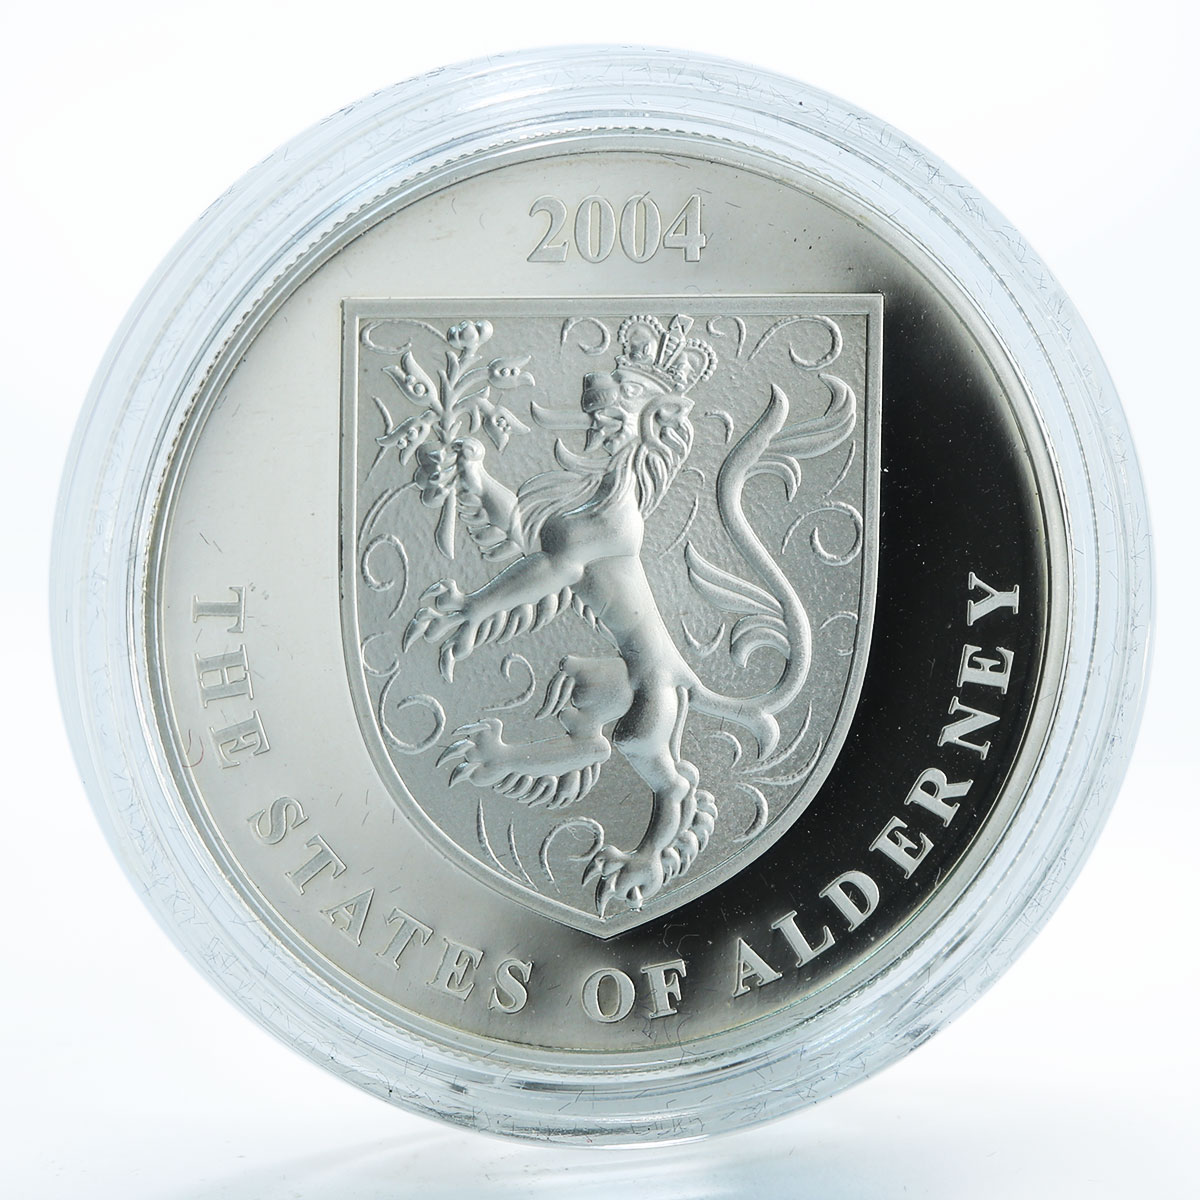 Alderney 5 Pounds David Beckham England football team silver proof coin 2004